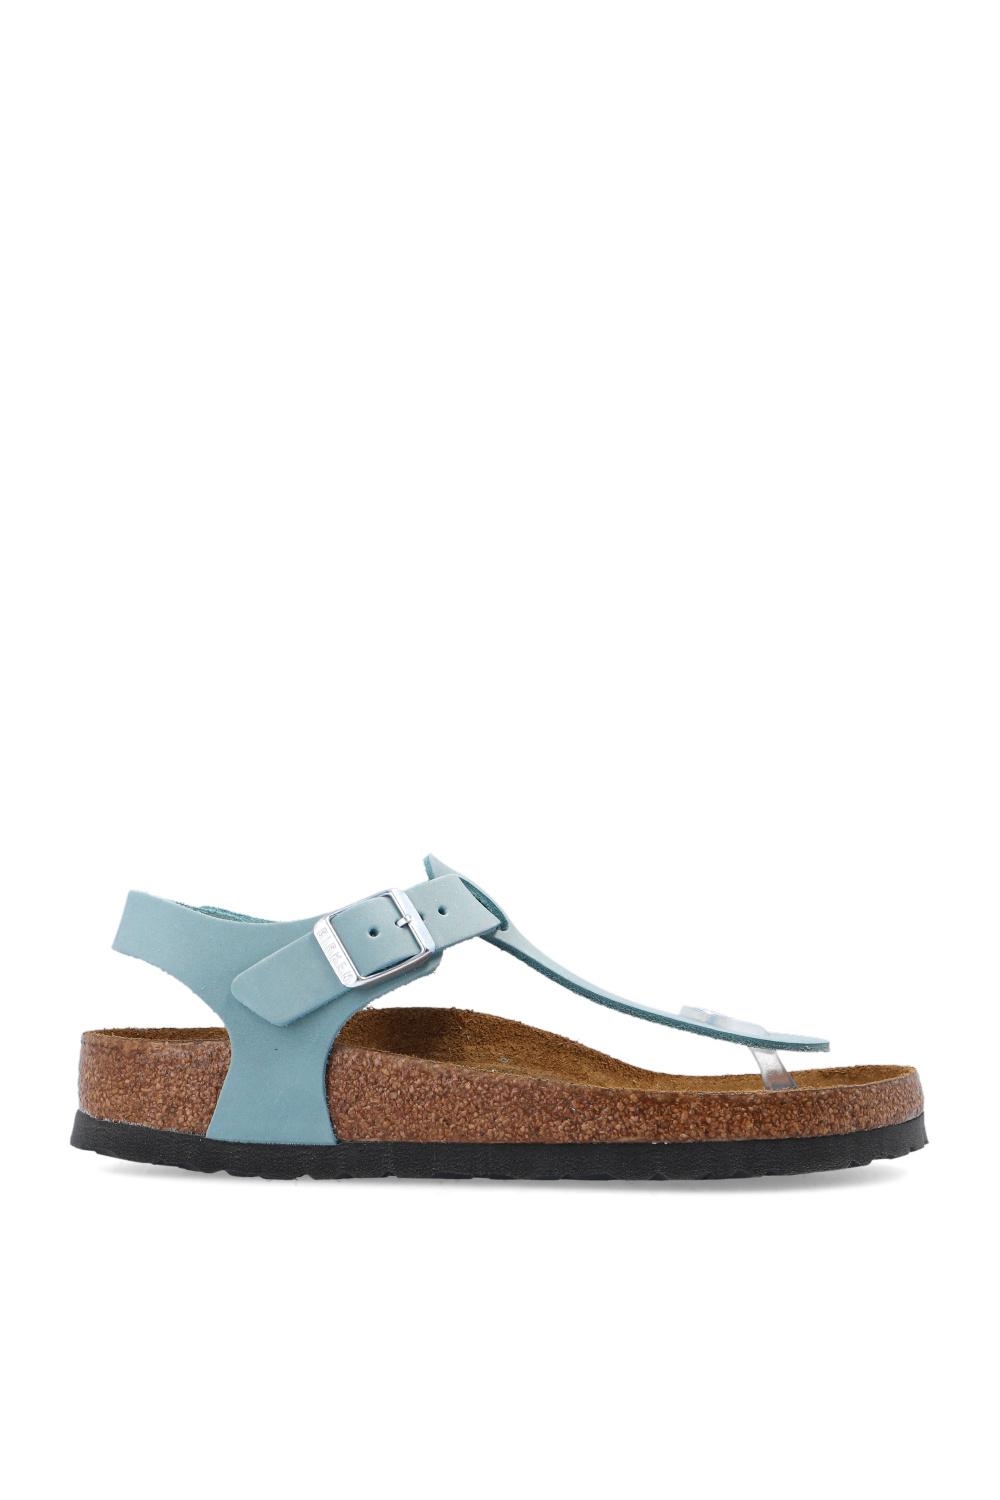 Birkenstock 'kairo' Sandals in Blue | Lyst